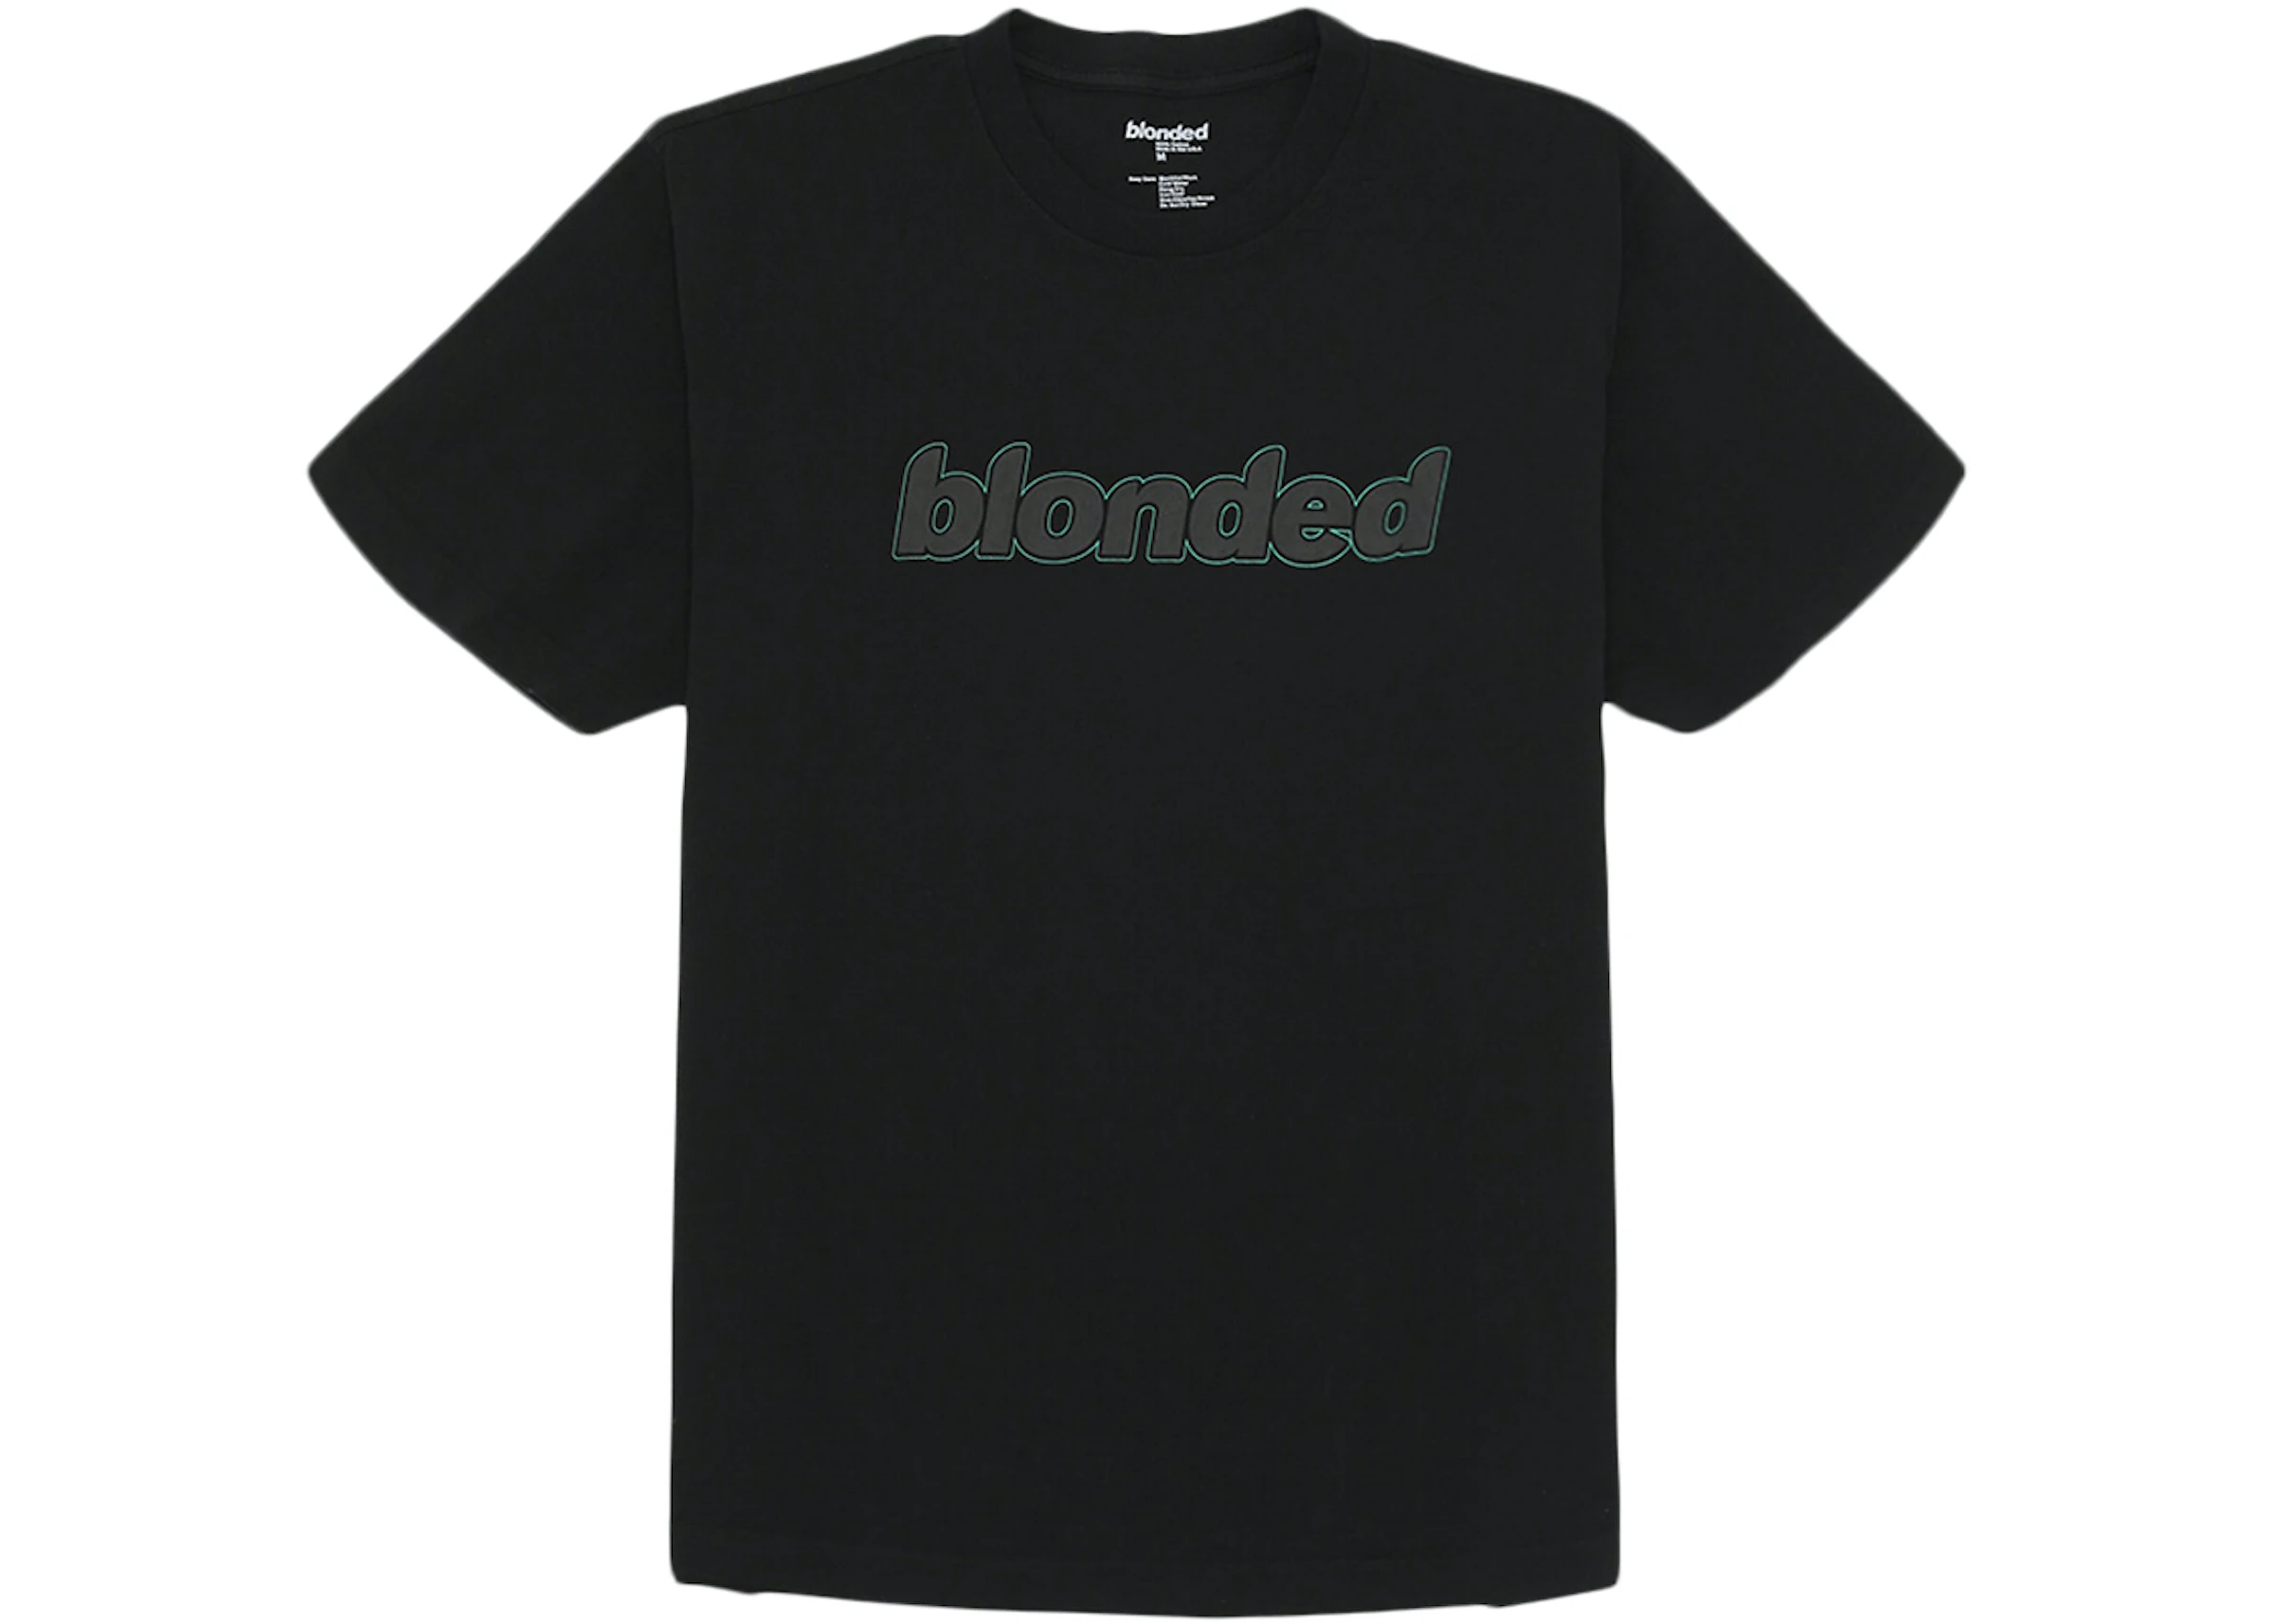 Frank Ocean Blonded Logo T-Shirt Black - FW19 - IT